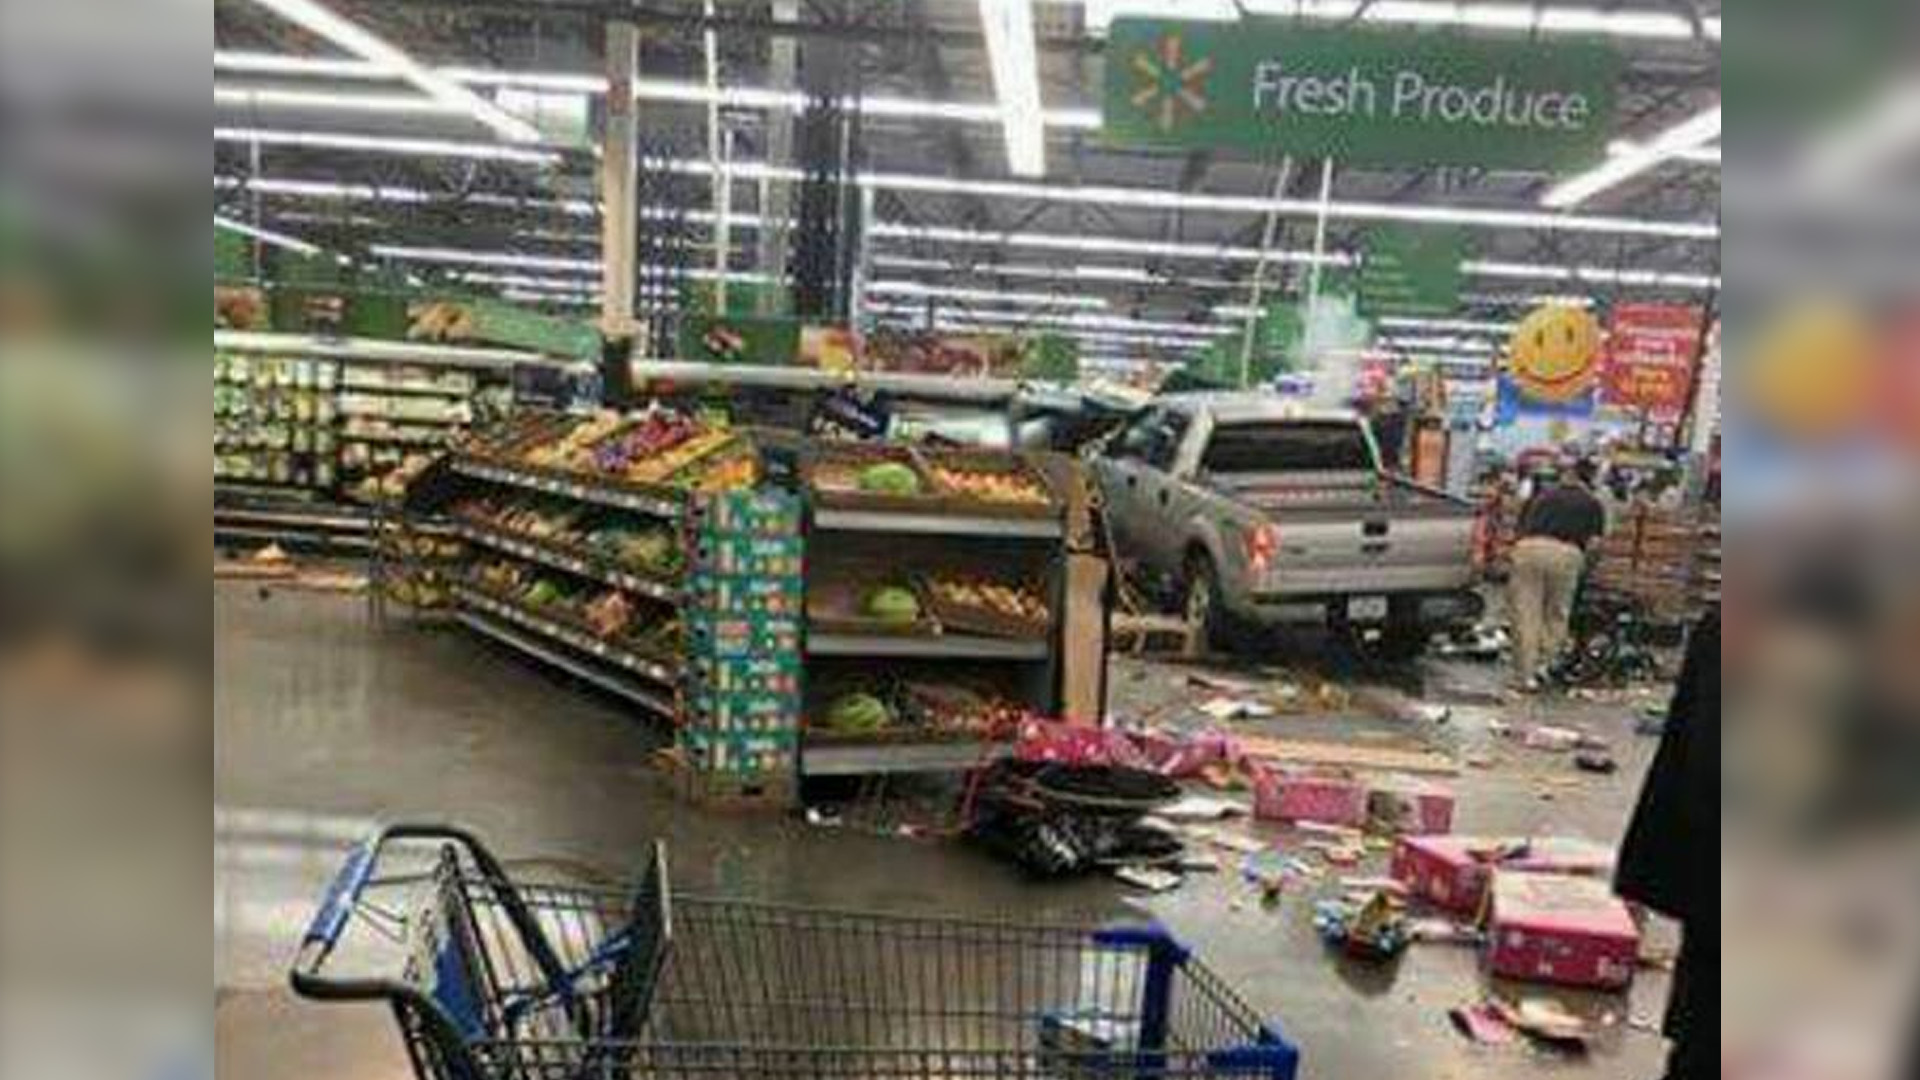 3 Killed When Truck Crashes Into Walmart